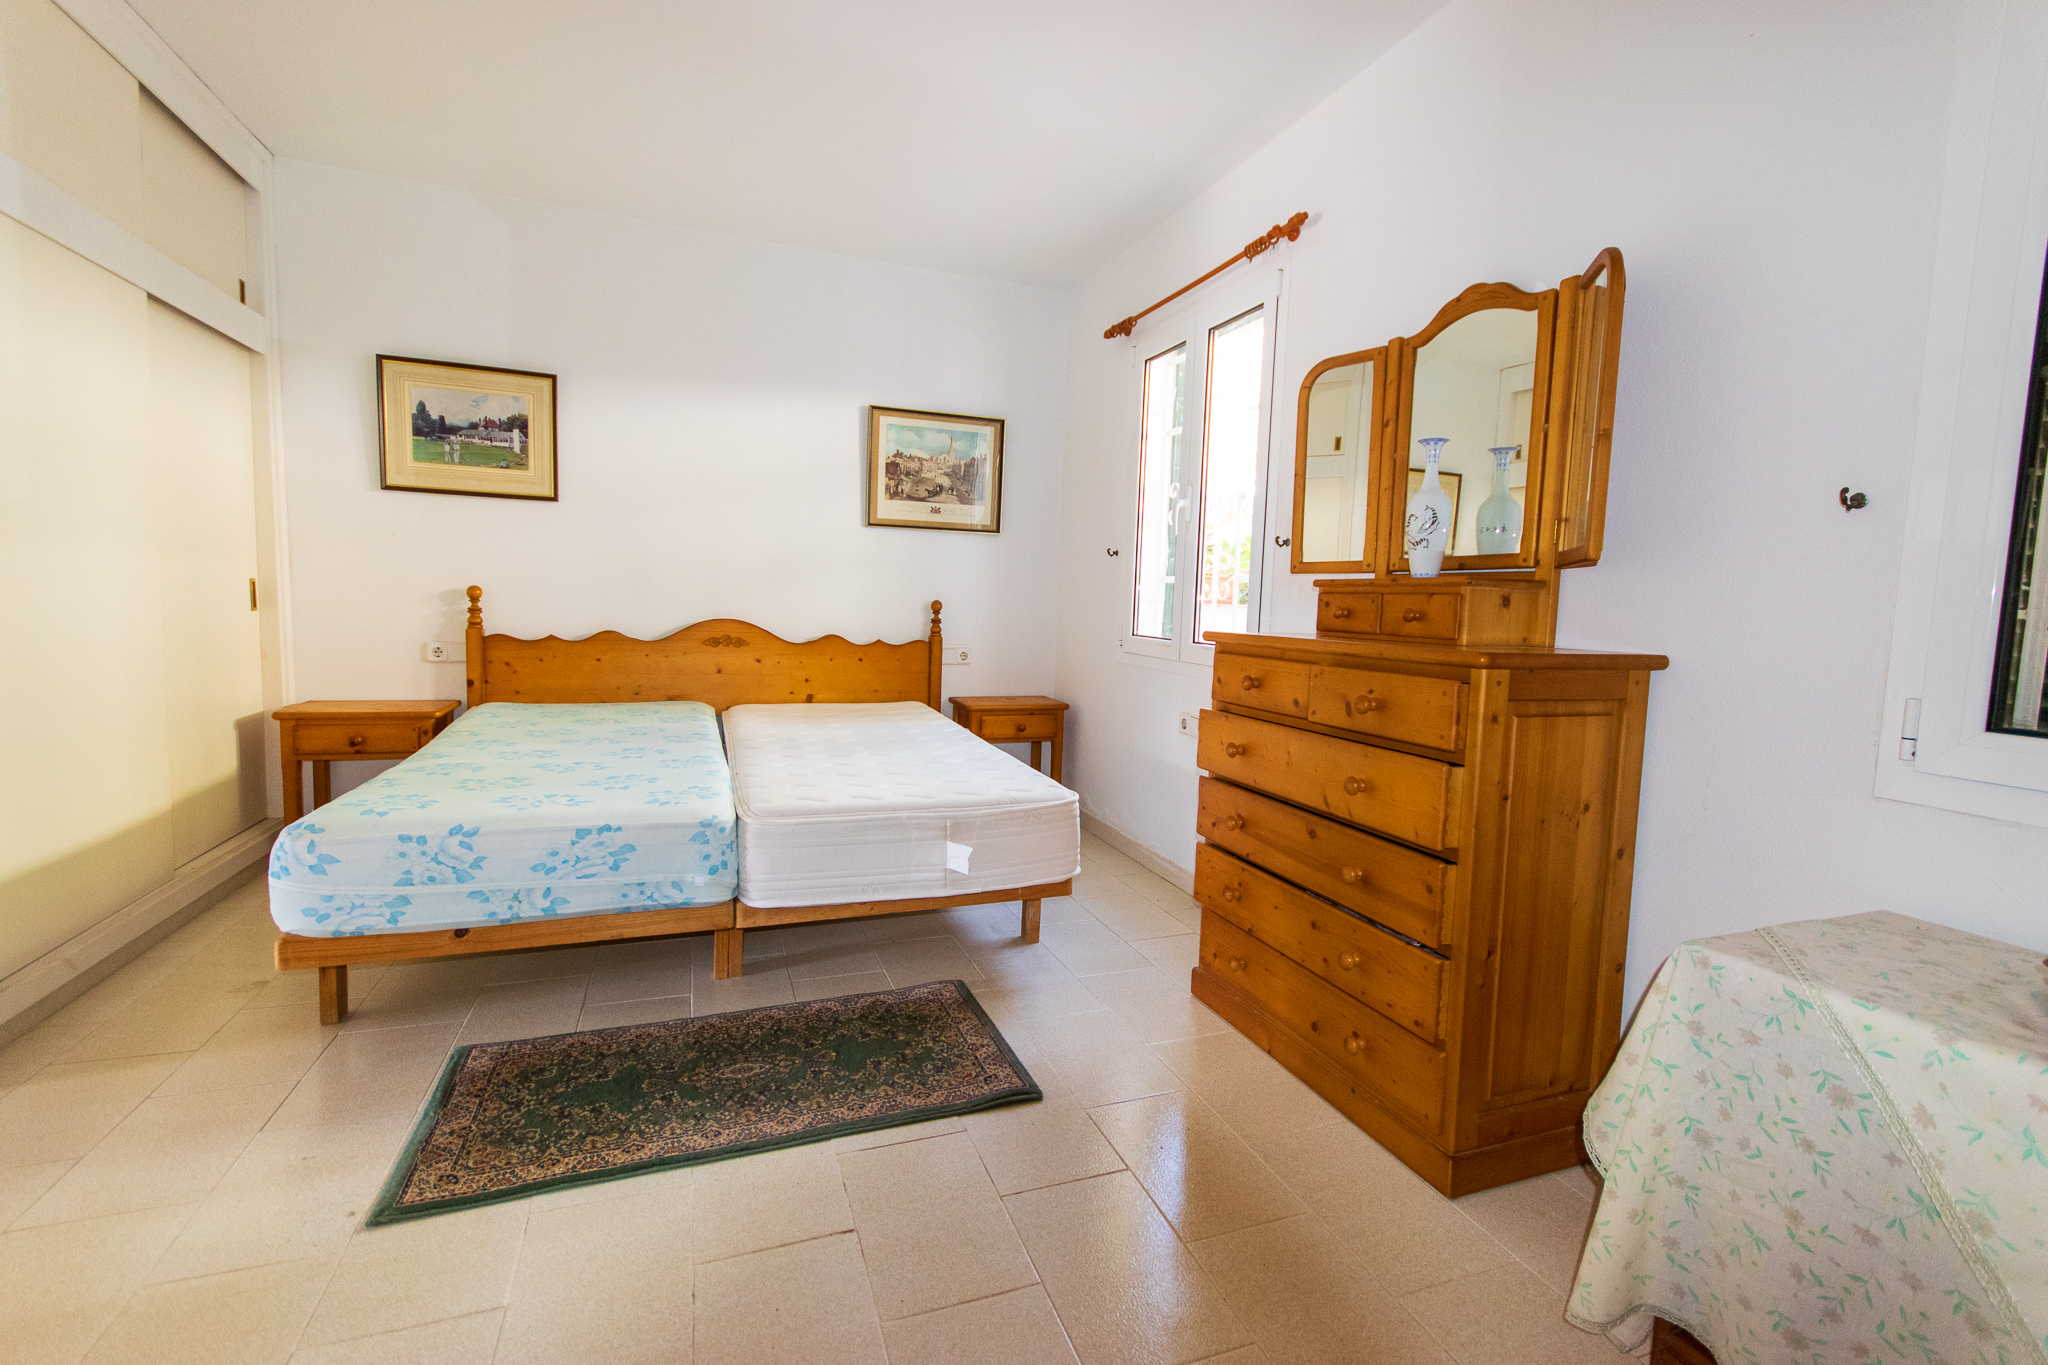 Bedroom with bathroom in duplex with good views in Cala Galdana